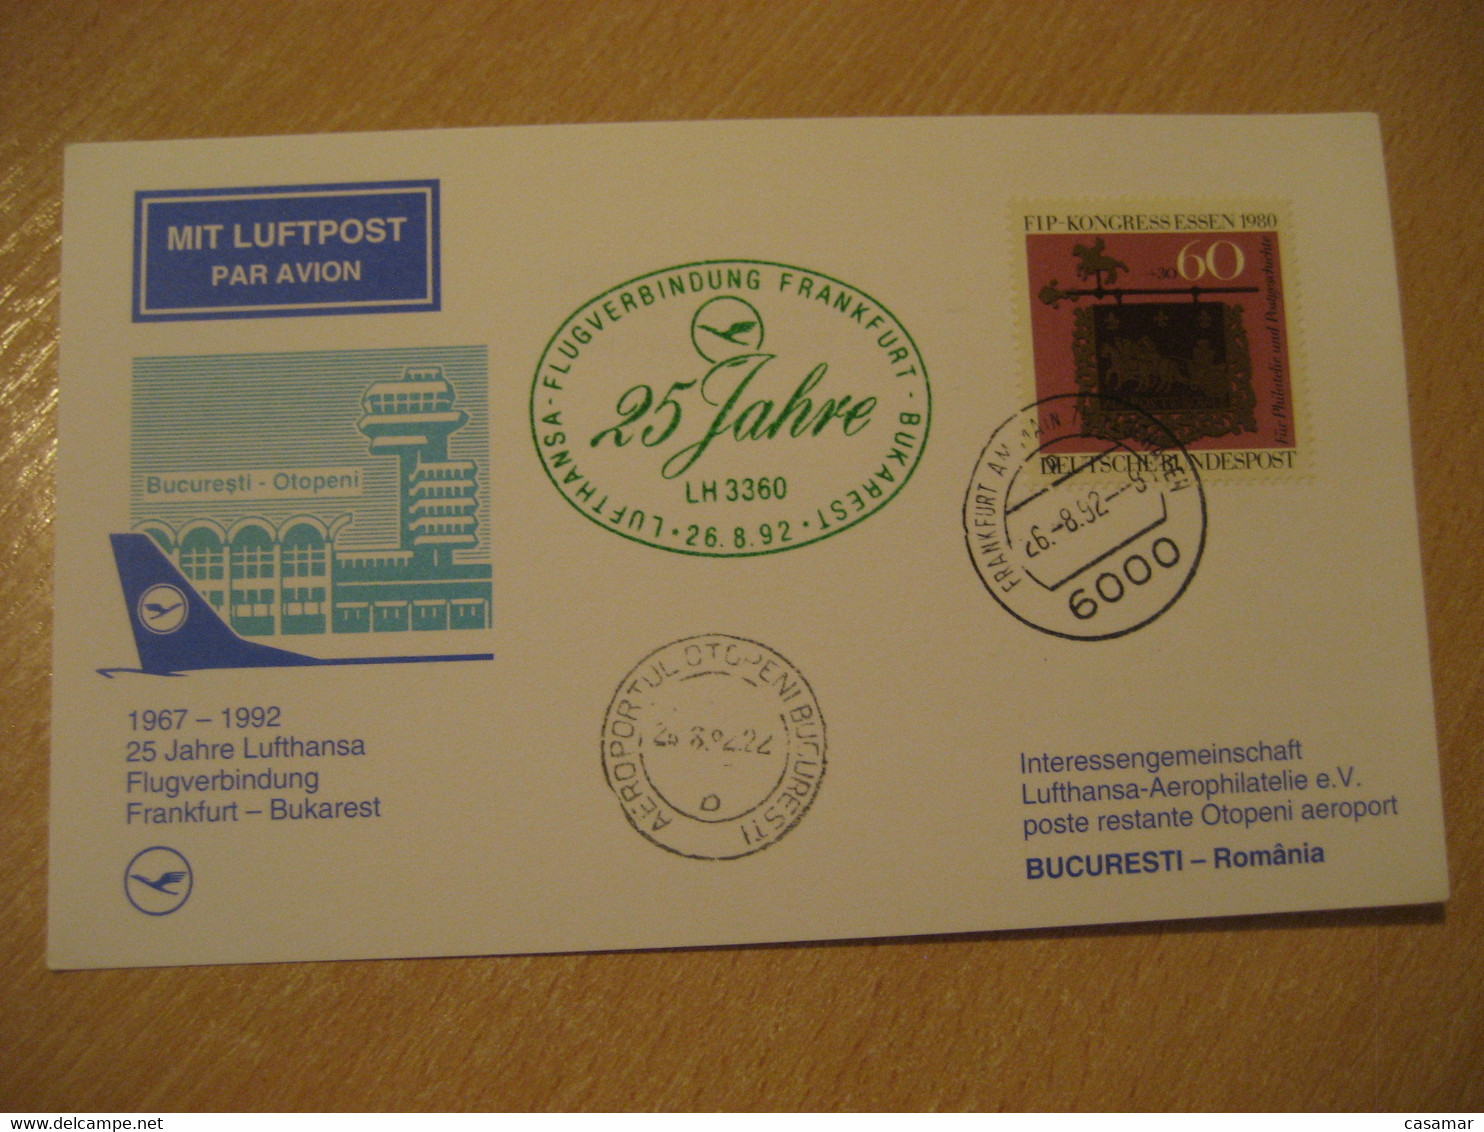 BUCHAREST Frankfurt 1992 Lufthansa Airlines Airline 25 Year First Flight Green Cancel Card ROMANIA GERMANY - Storia Postale